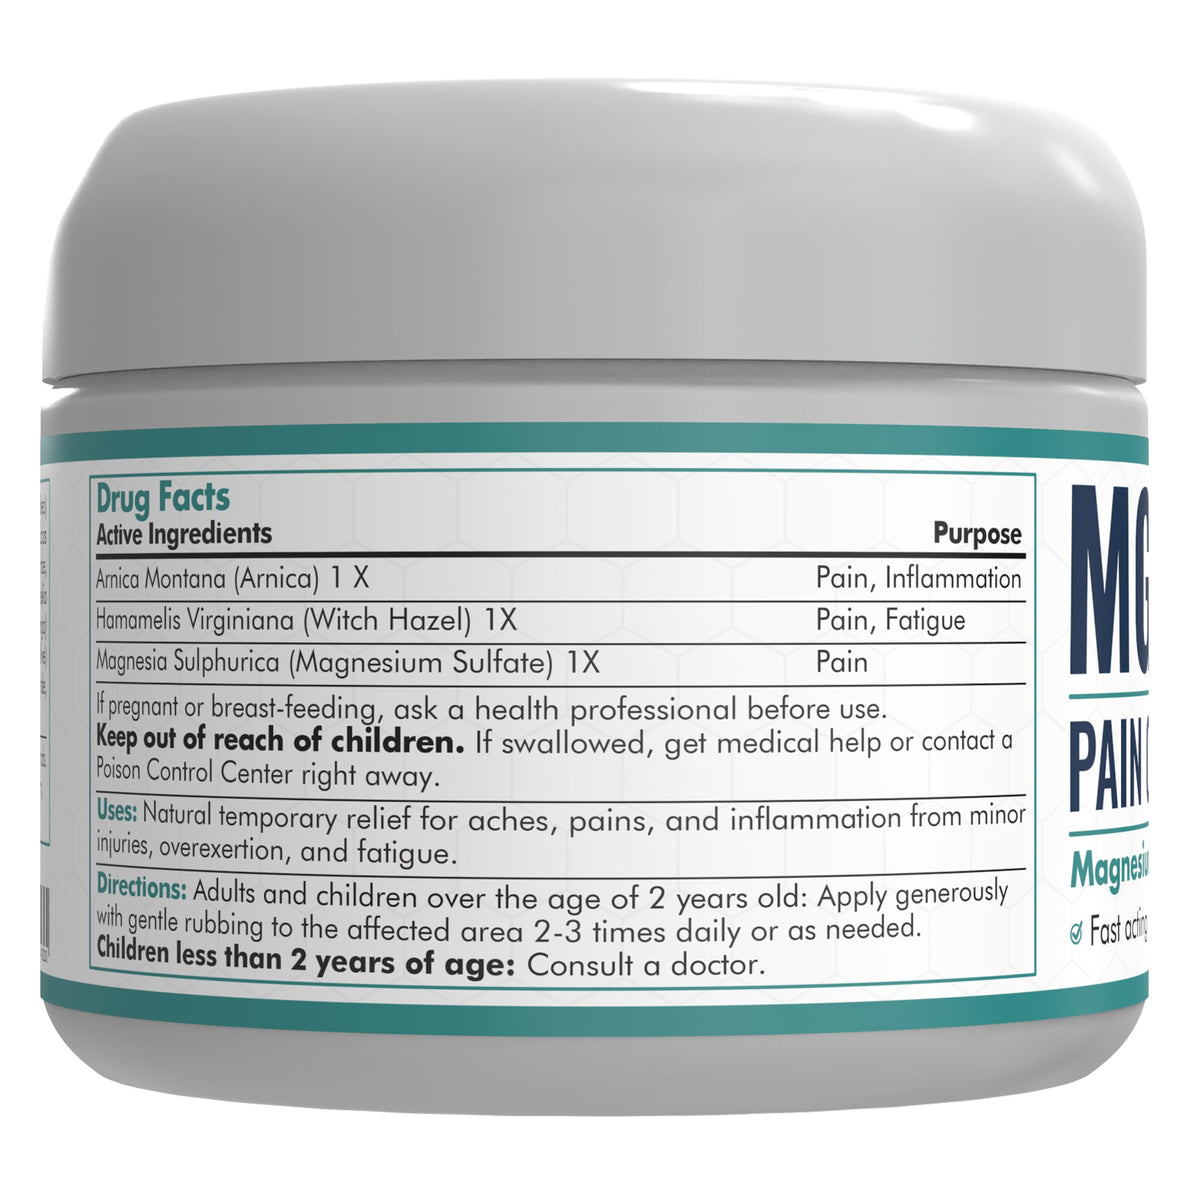 Mars Wellness MG+ Pain Cream - Extra Strength Magnesium and Arnica Cream - 4 OZ Tub - Sore Legs and Joints, Leg Cramps, Sports and Arthritis Pain Rub